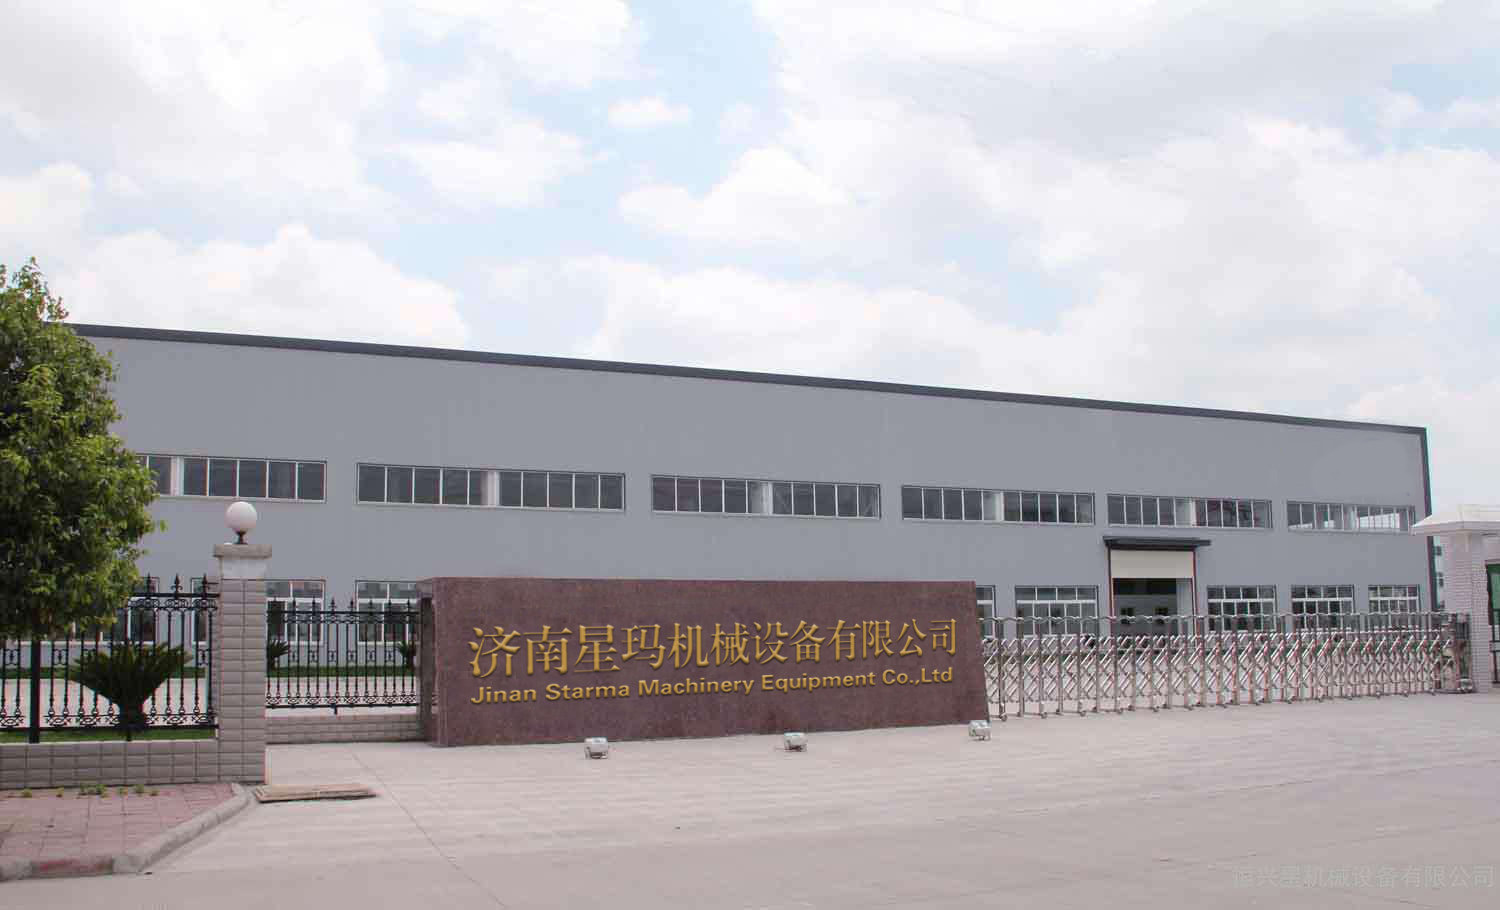 Jinan Starma Machinery Equipment Co,Ltd. logo